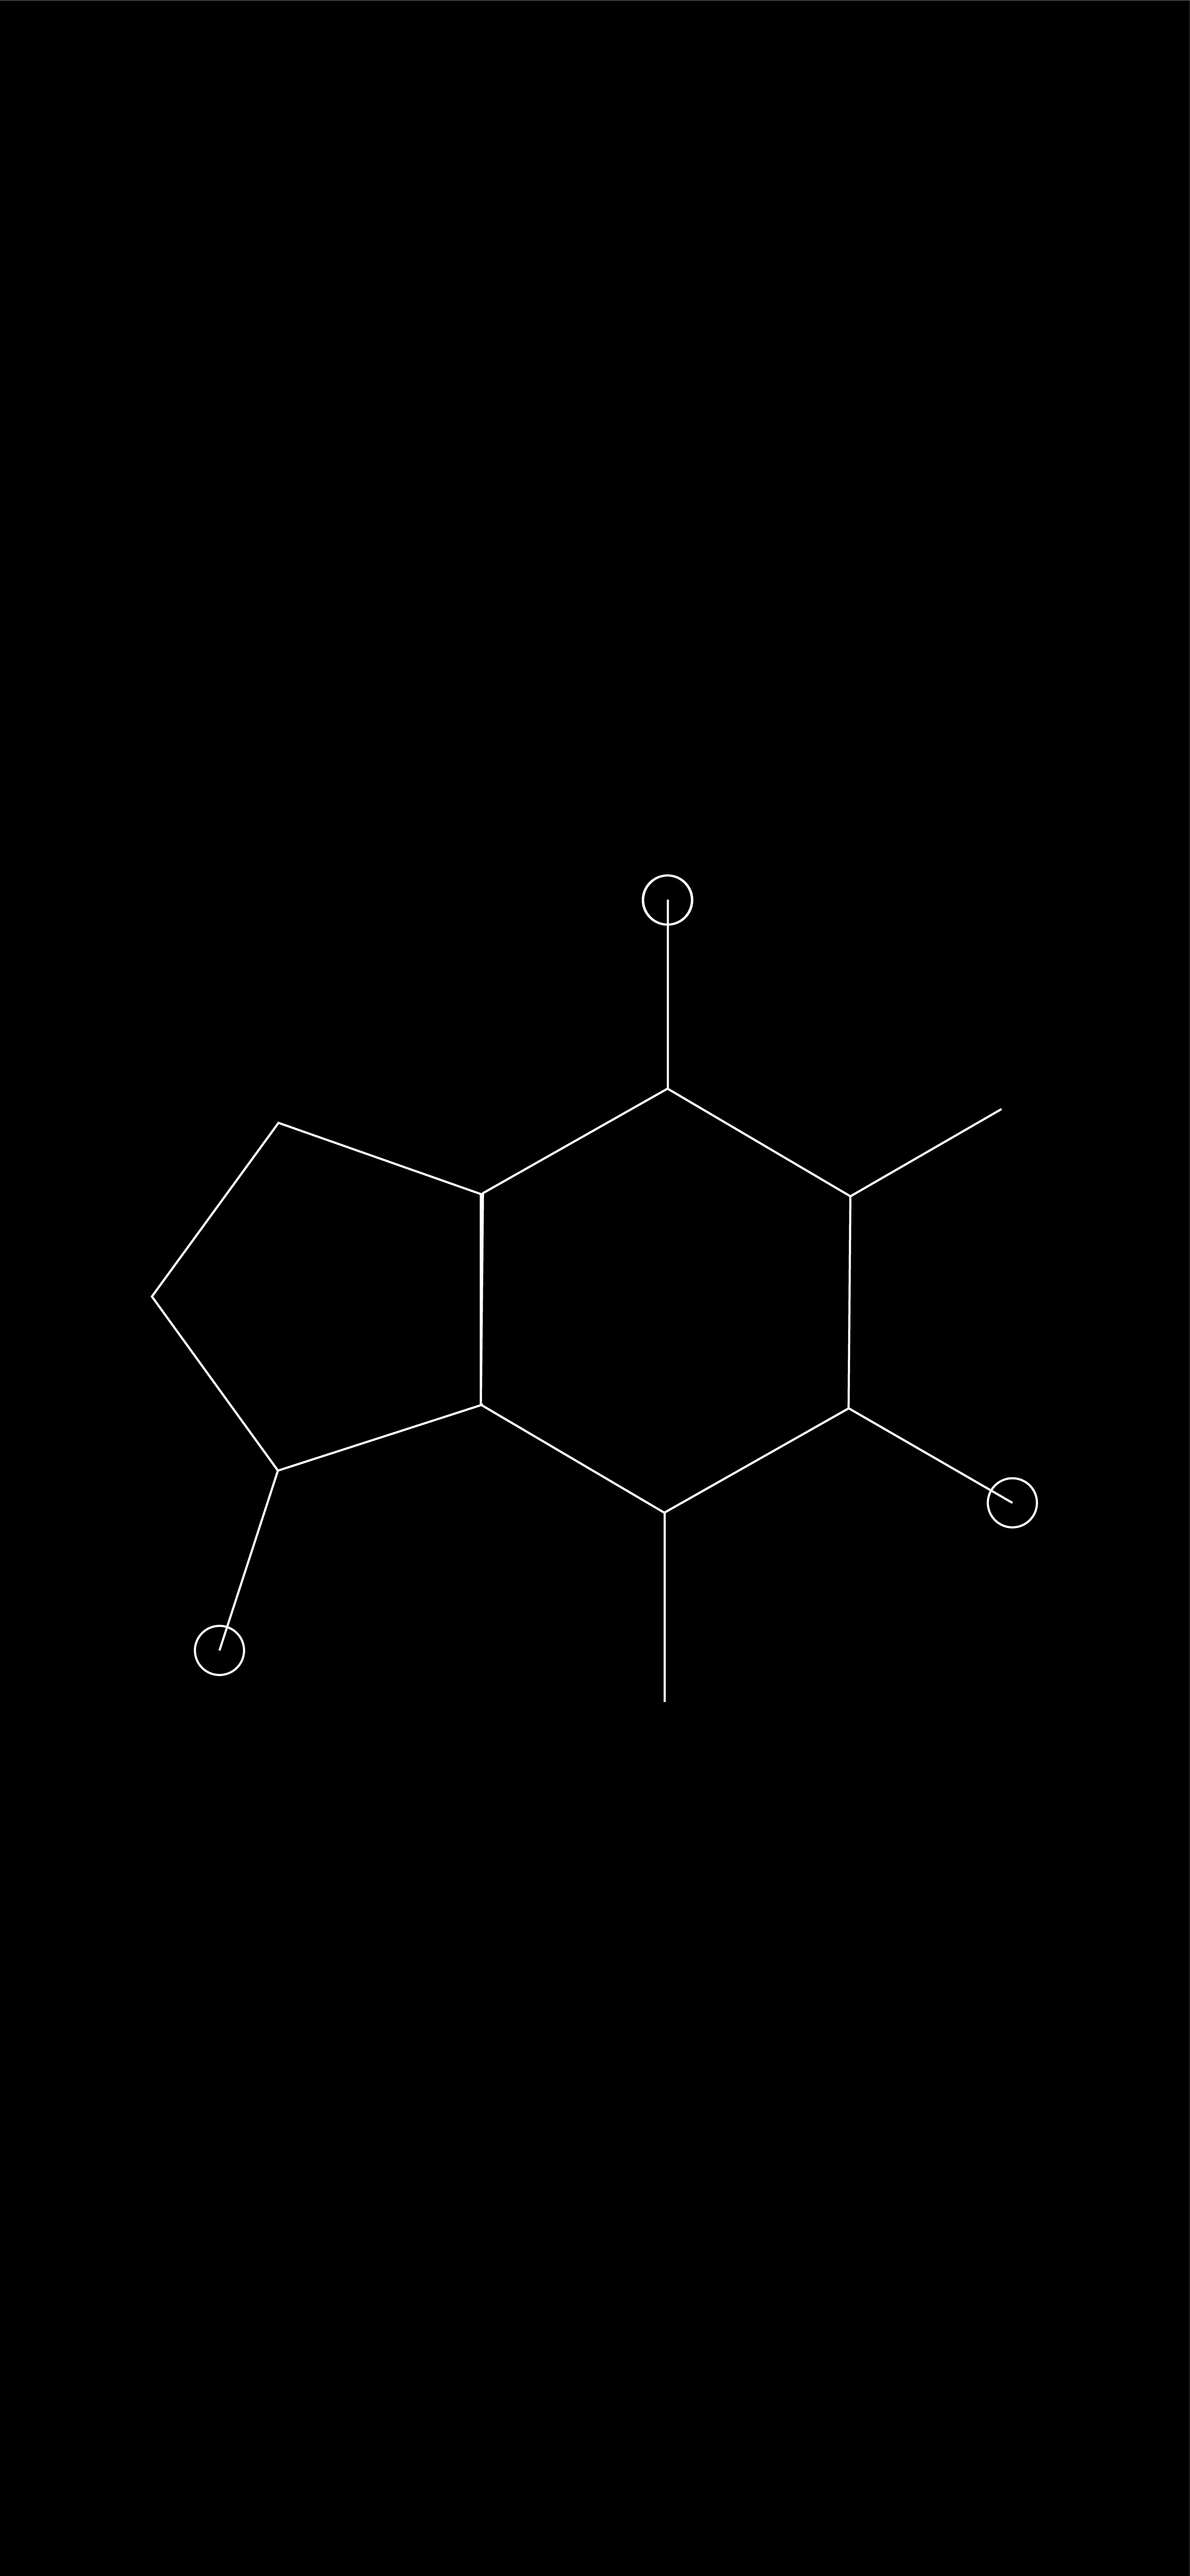 Minimalist Wallpaper of a Caffeine Molecule 1125 x 2436